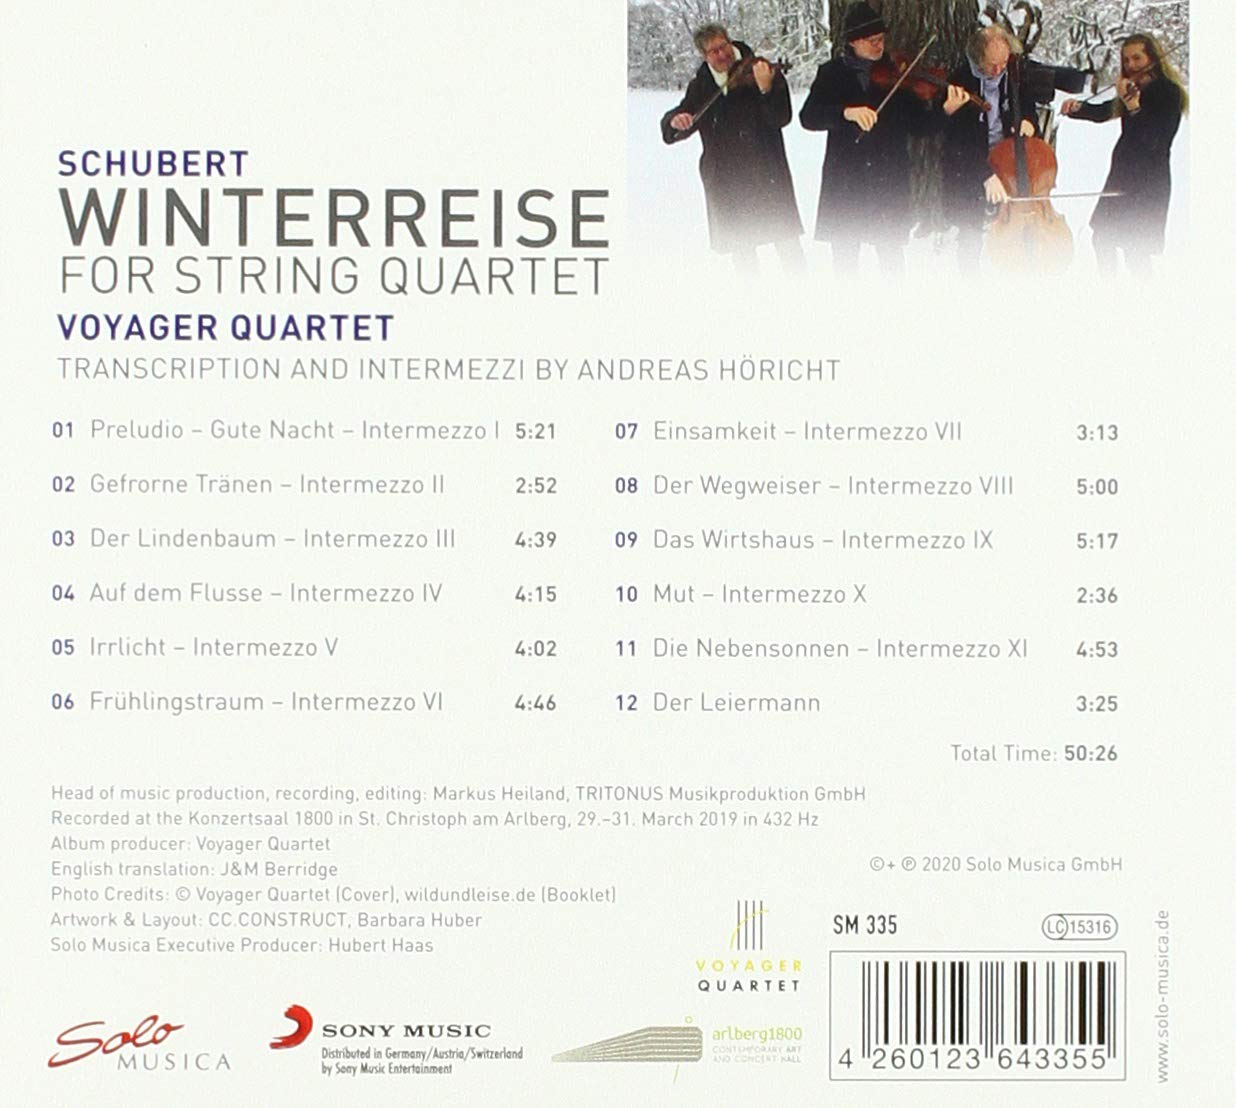 Voyager Quartet 슈베르트: 현악사중주로 편곡한 겨울 나그네 (Schubert: Winterreise for String Quartet)